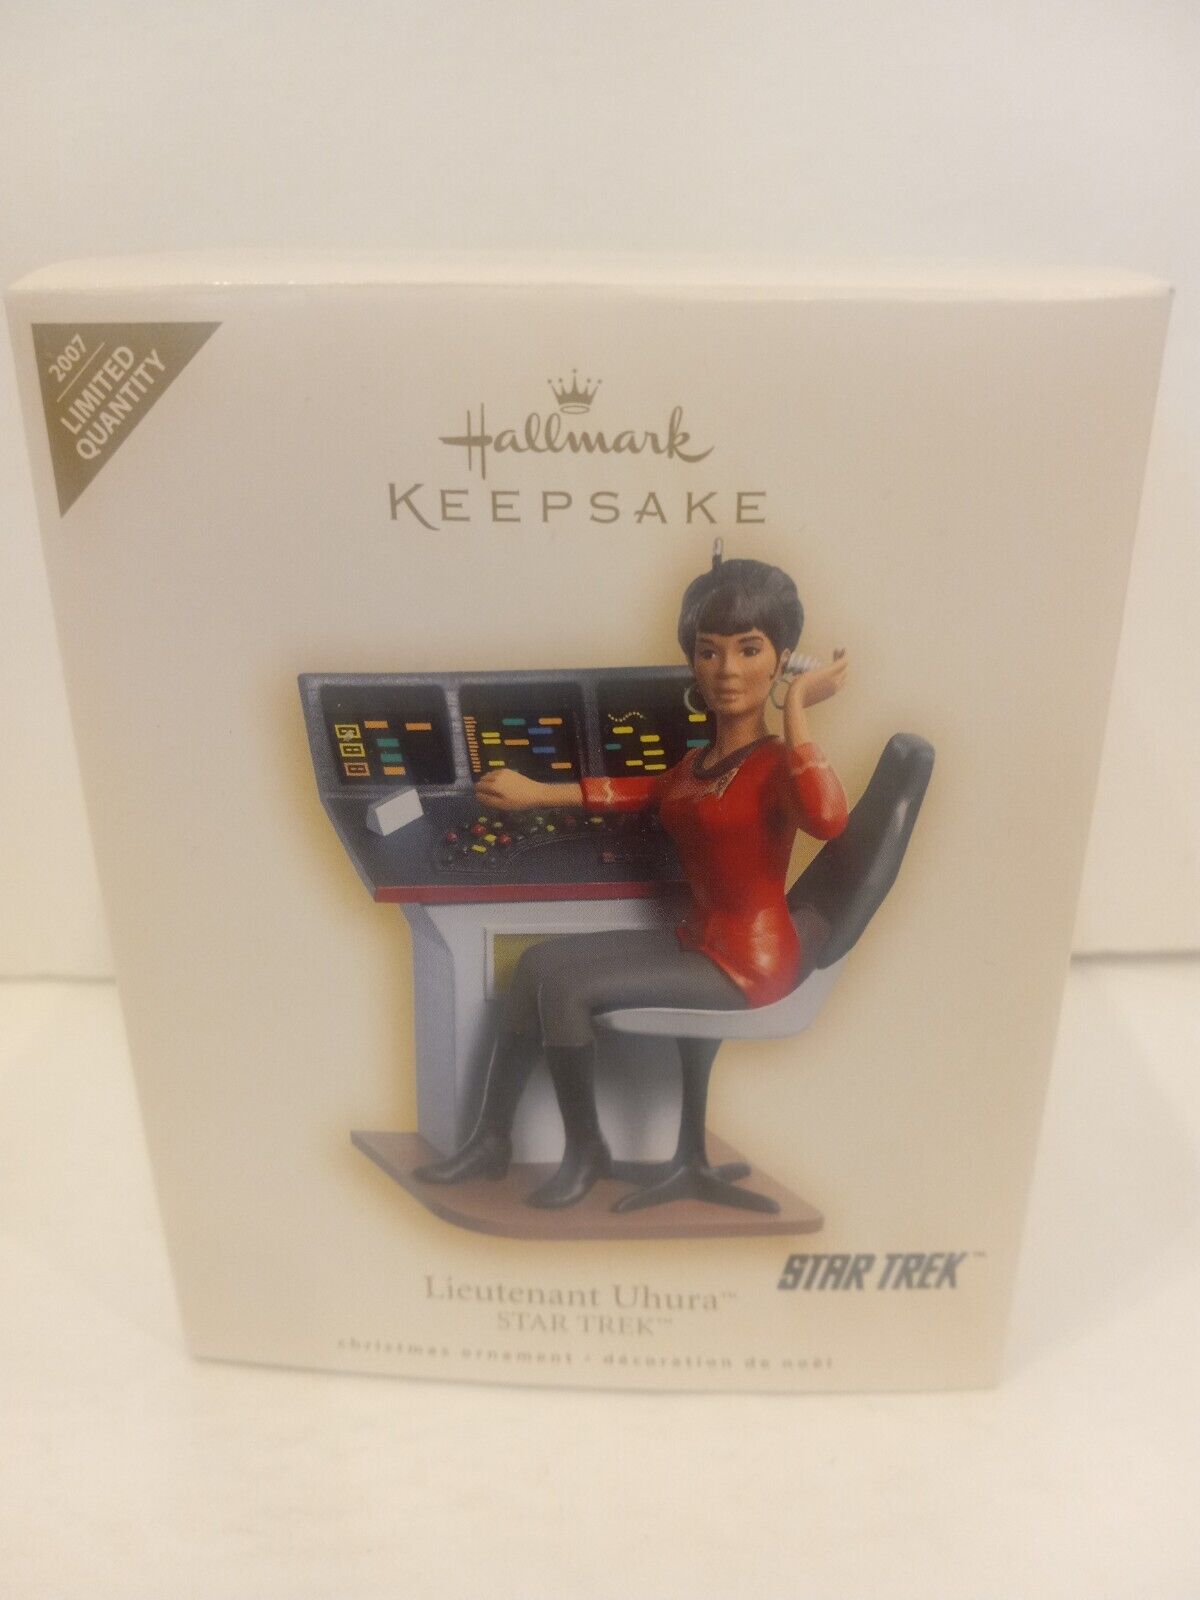 2007 Hallmark Keepsake Ornament - Lieutenant Uhura Star Trek - Limited Edition